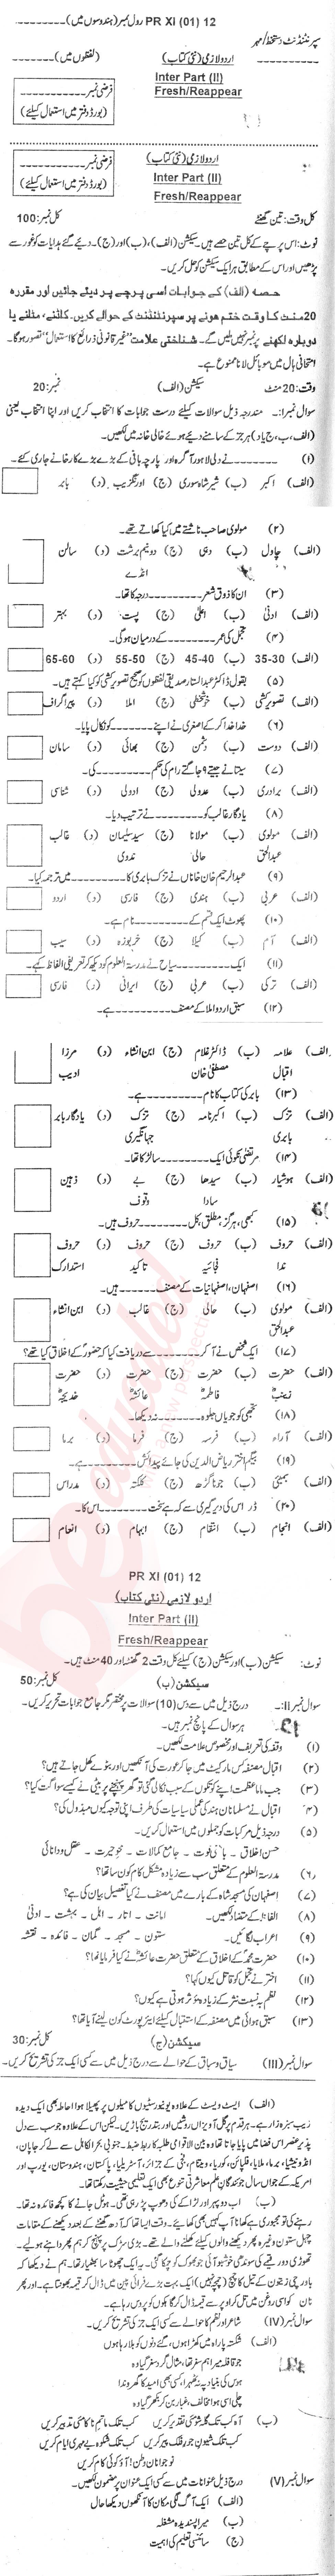 Urdu 12th class Past Paper Group 1 BISE Bannu 2012